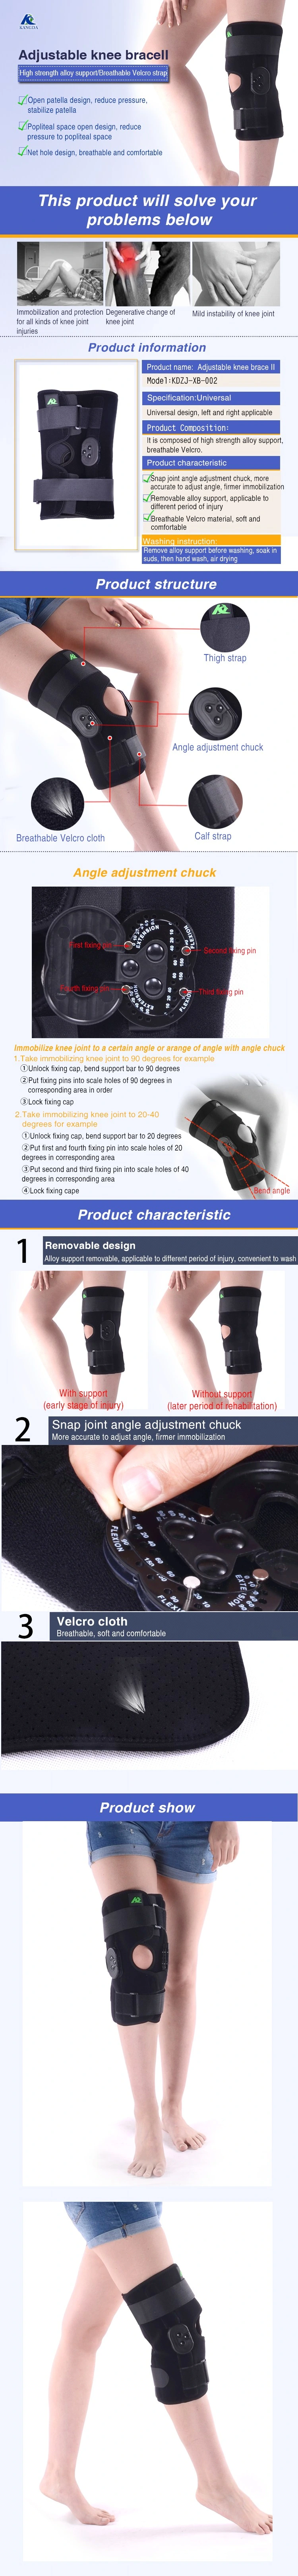 High Quality New Orthopedic Orthosis Adjustable Post Op Medical ROM Knee Brace for Arthritis